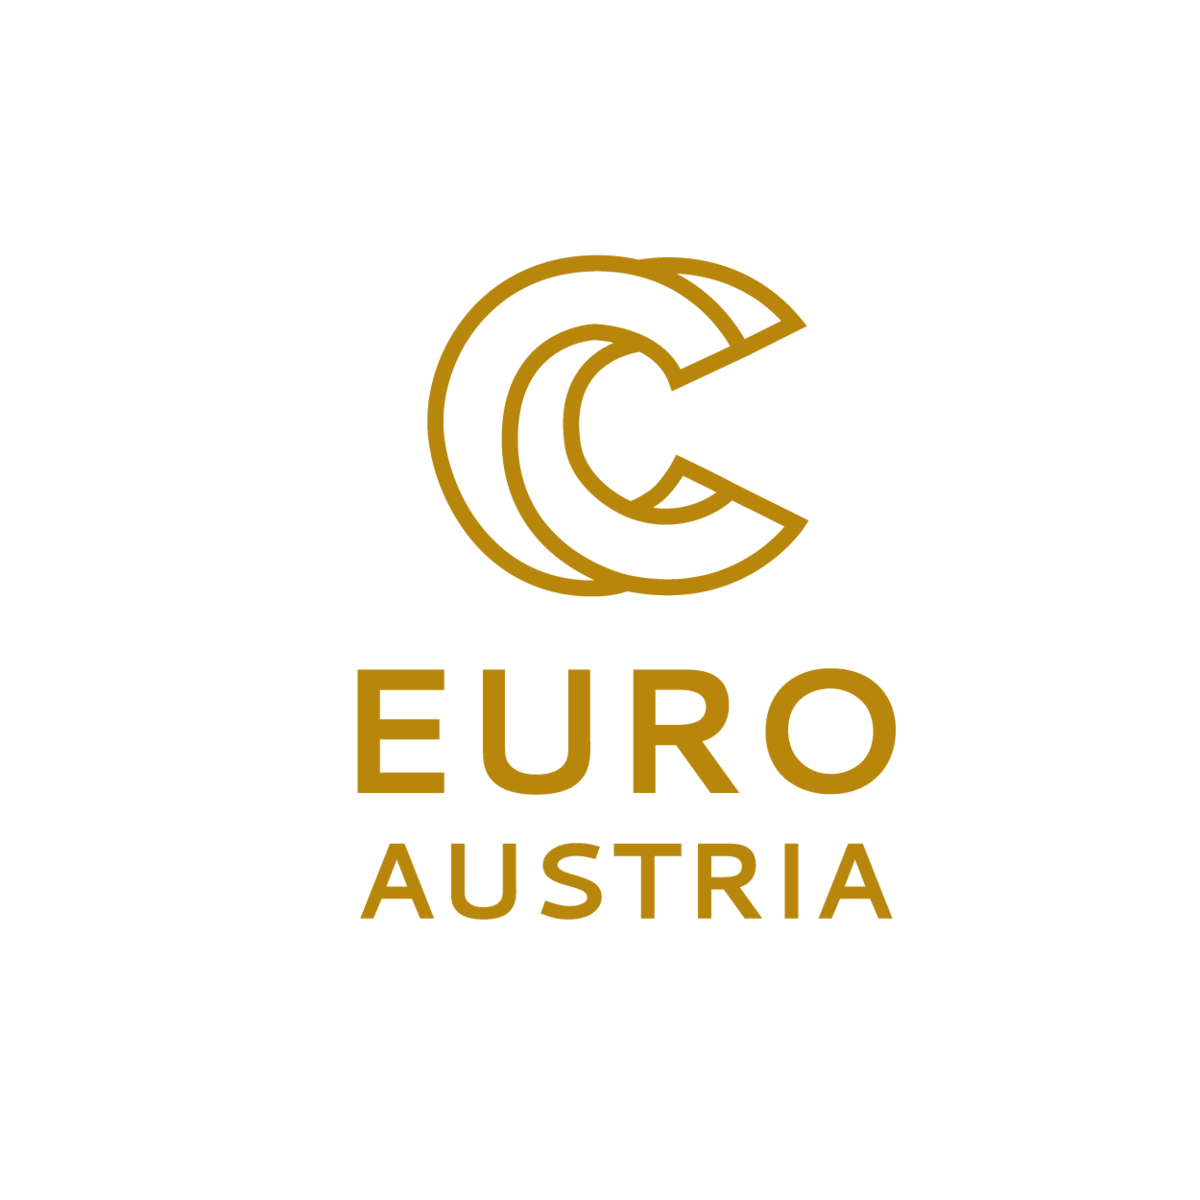 Logo: Goldener Schriftzug CC EURO AUSTRIA